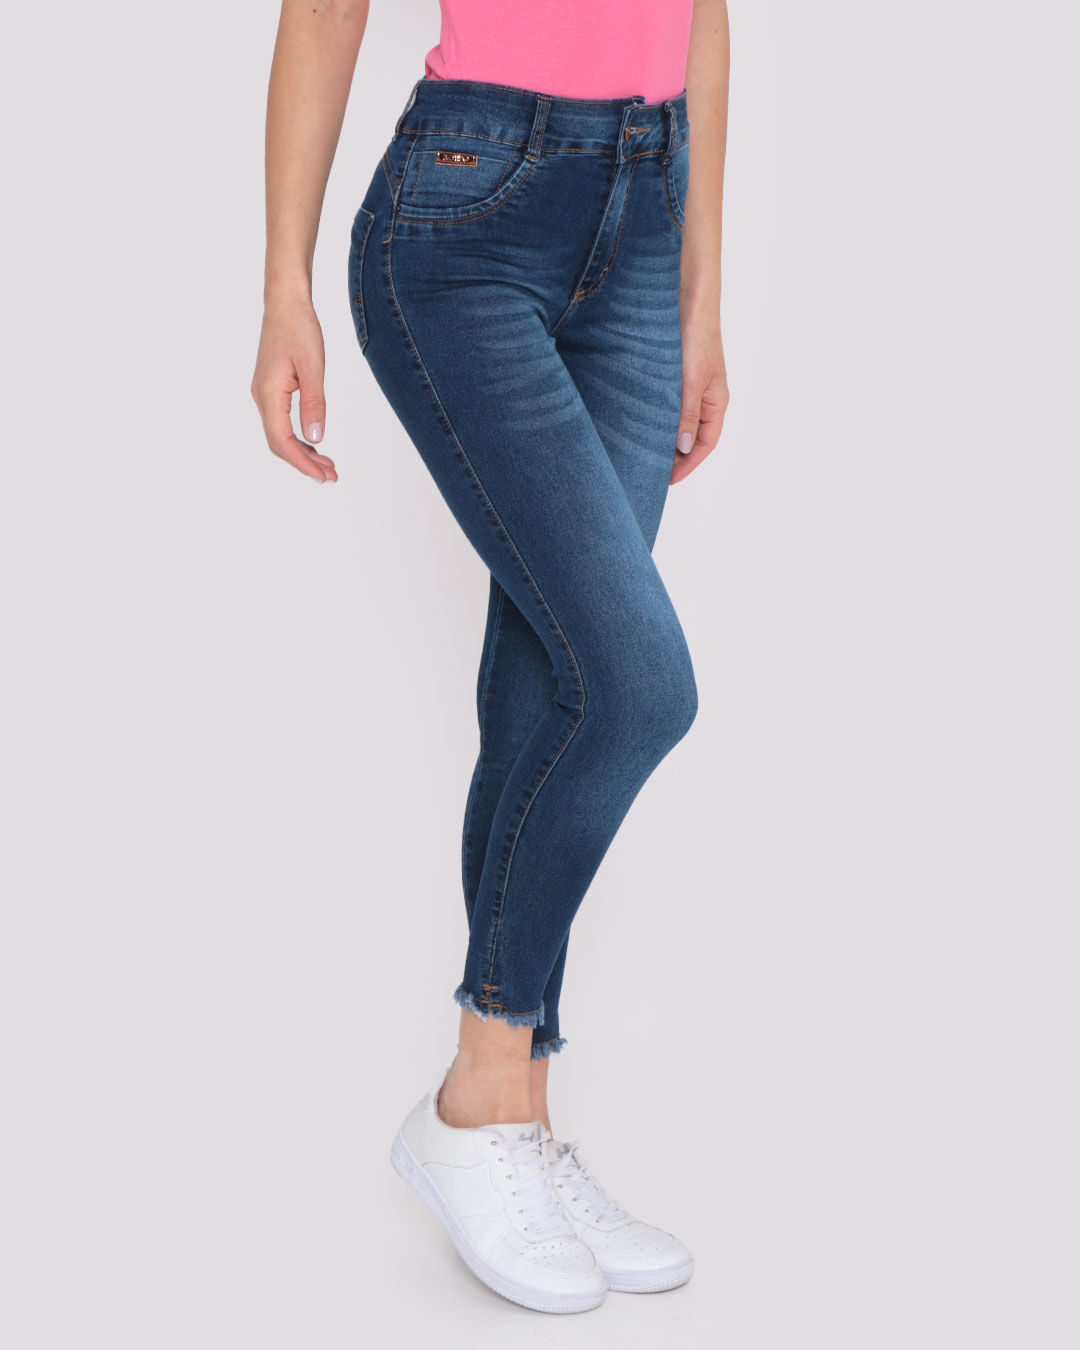 Calca-Jeans-Feminina-Biotipo-Skinny-Barra-Desfiada-Azul-Medio